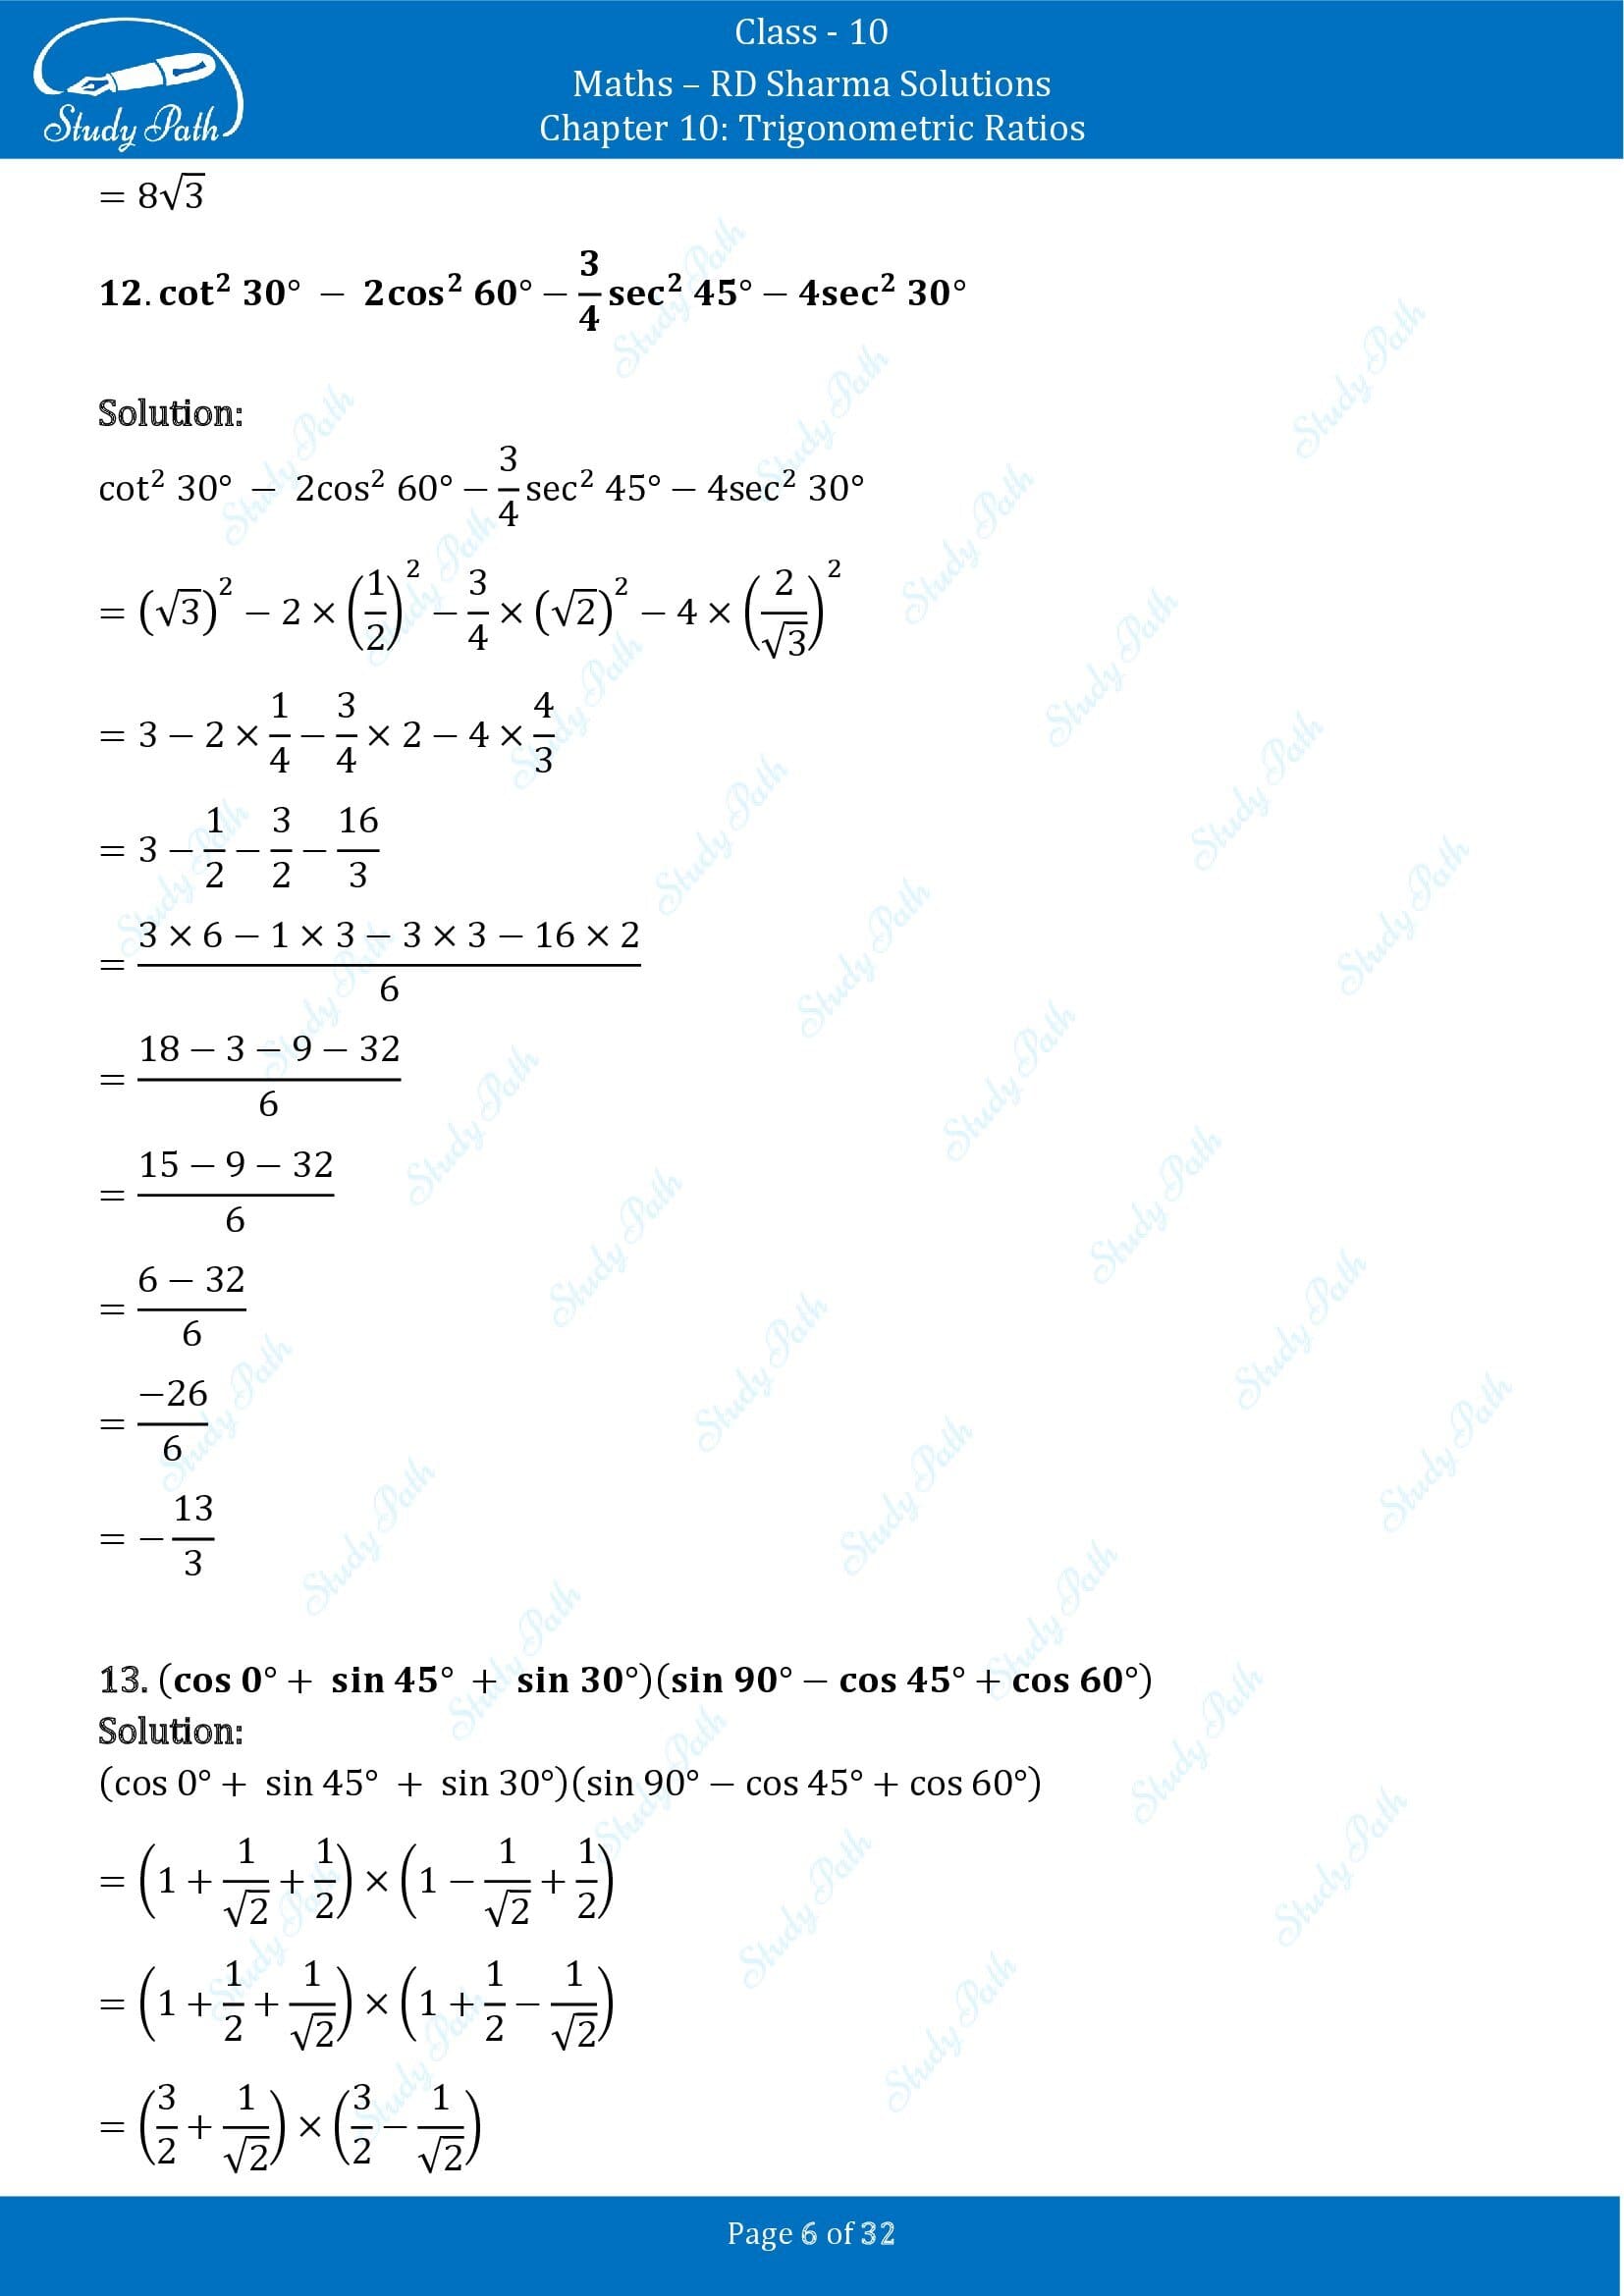 RD Sharma Solutions Class 10 Chapter 10 Trigonometric Ratios Exercise 10.2 00006